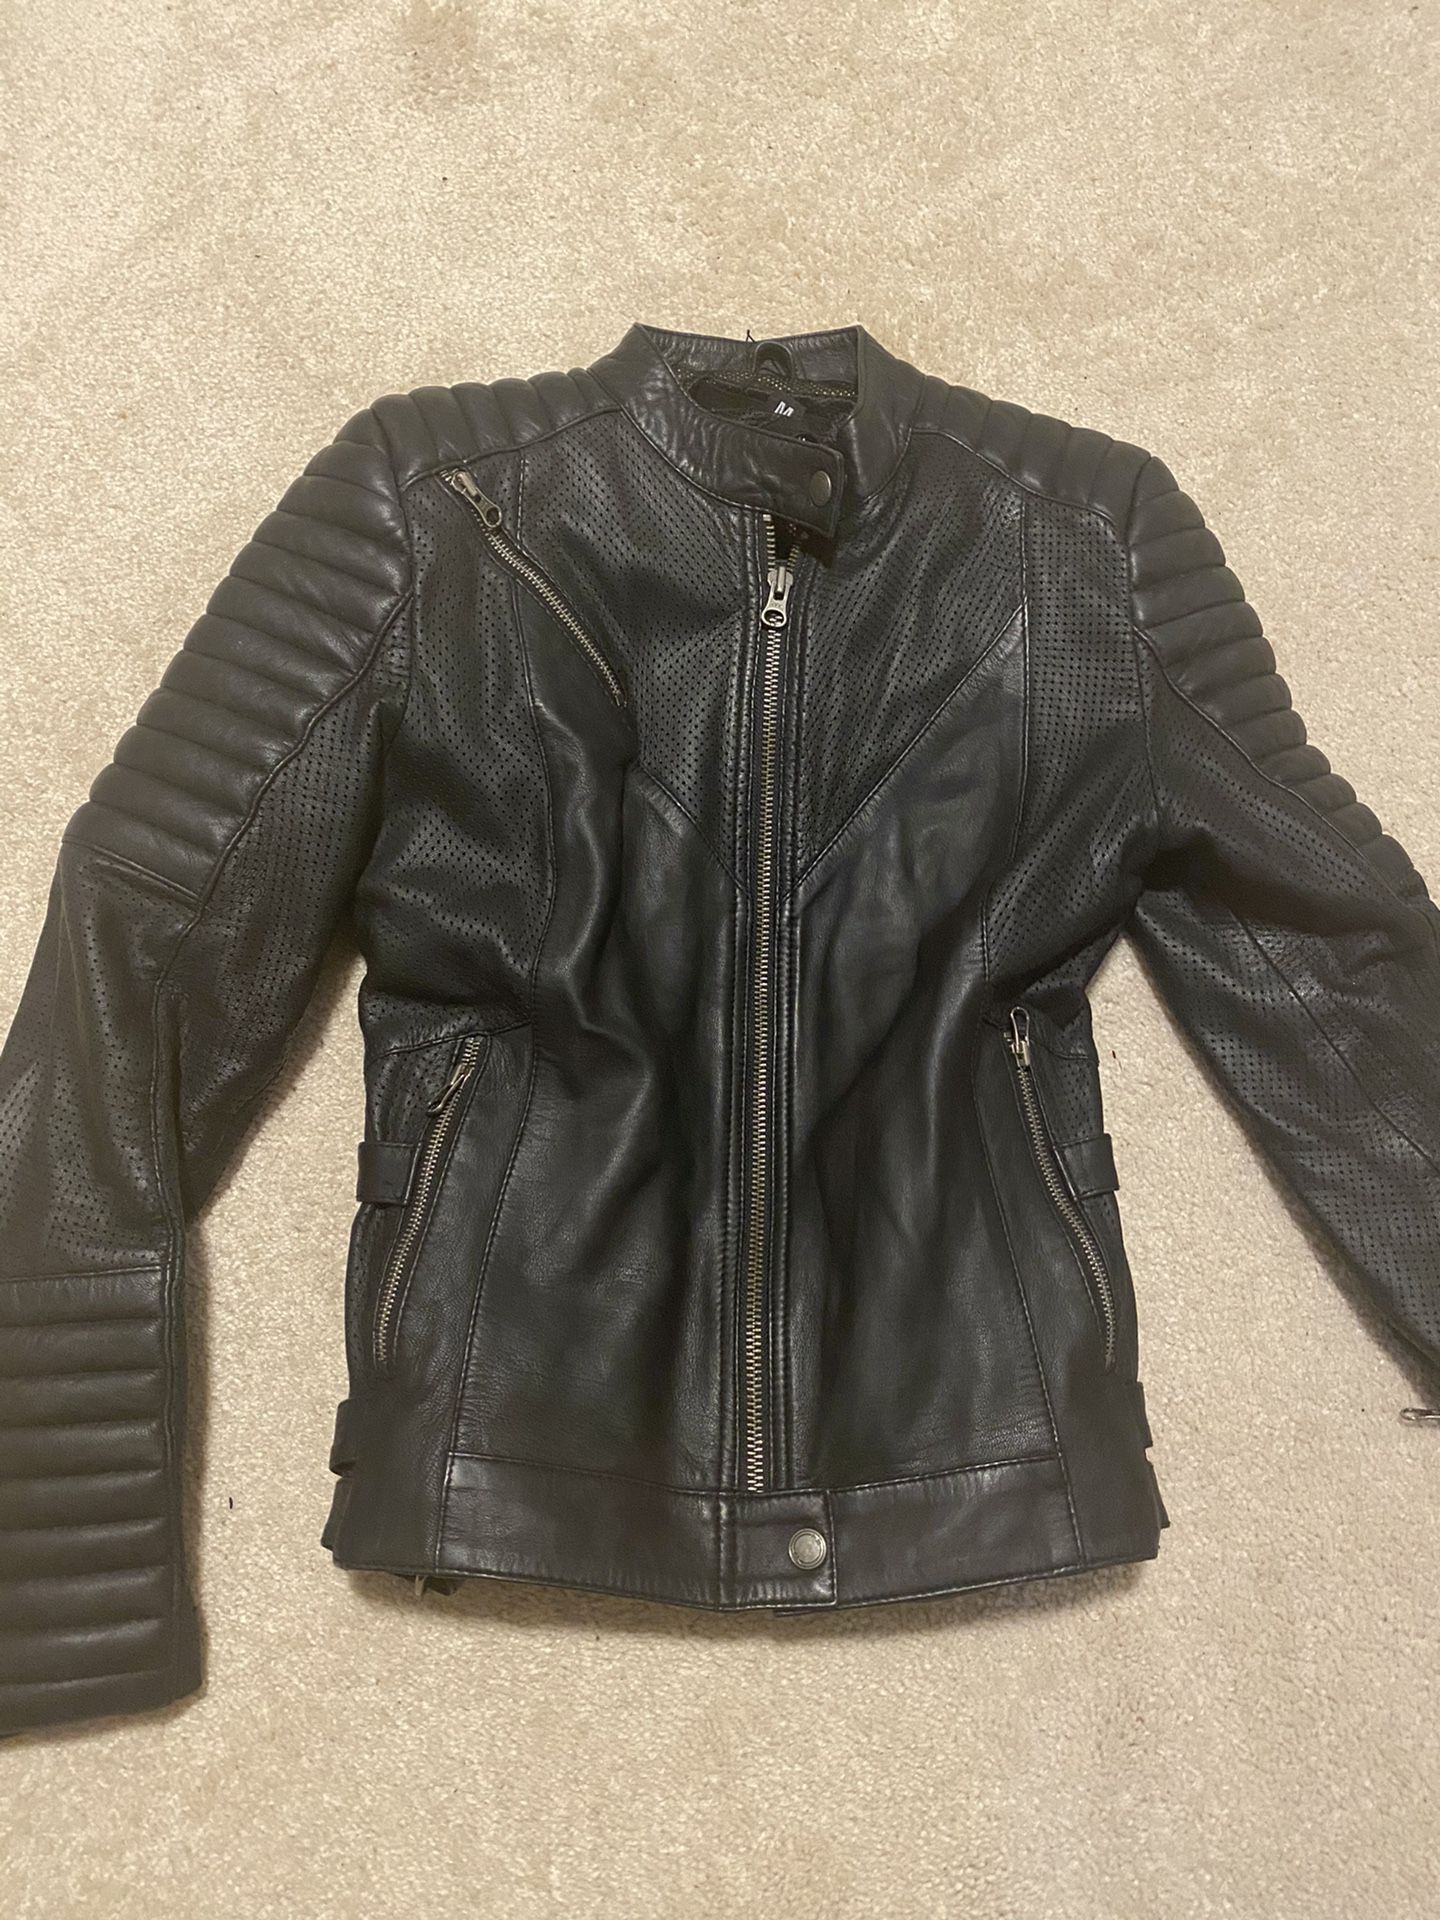 Motorcycle Jacket (Women’s Medium)